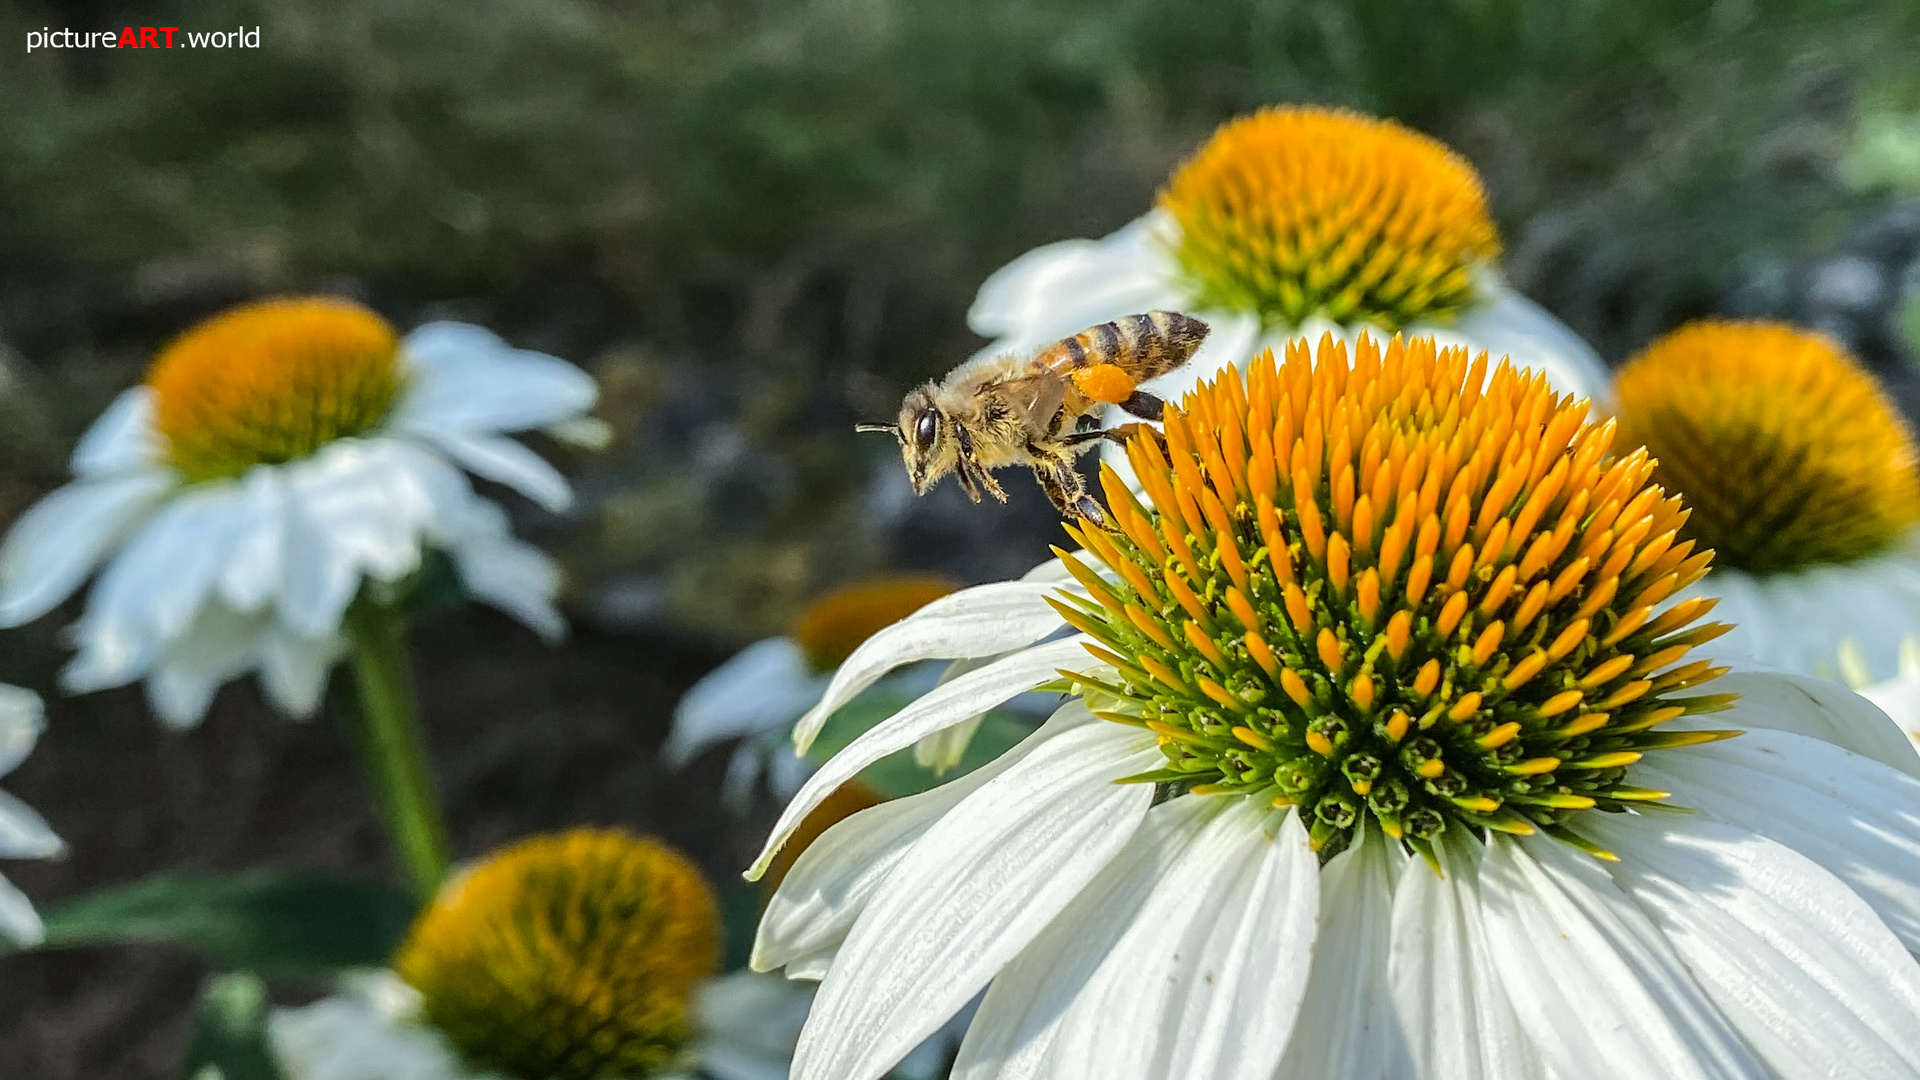 Biene mit dem iPhone fotografiert